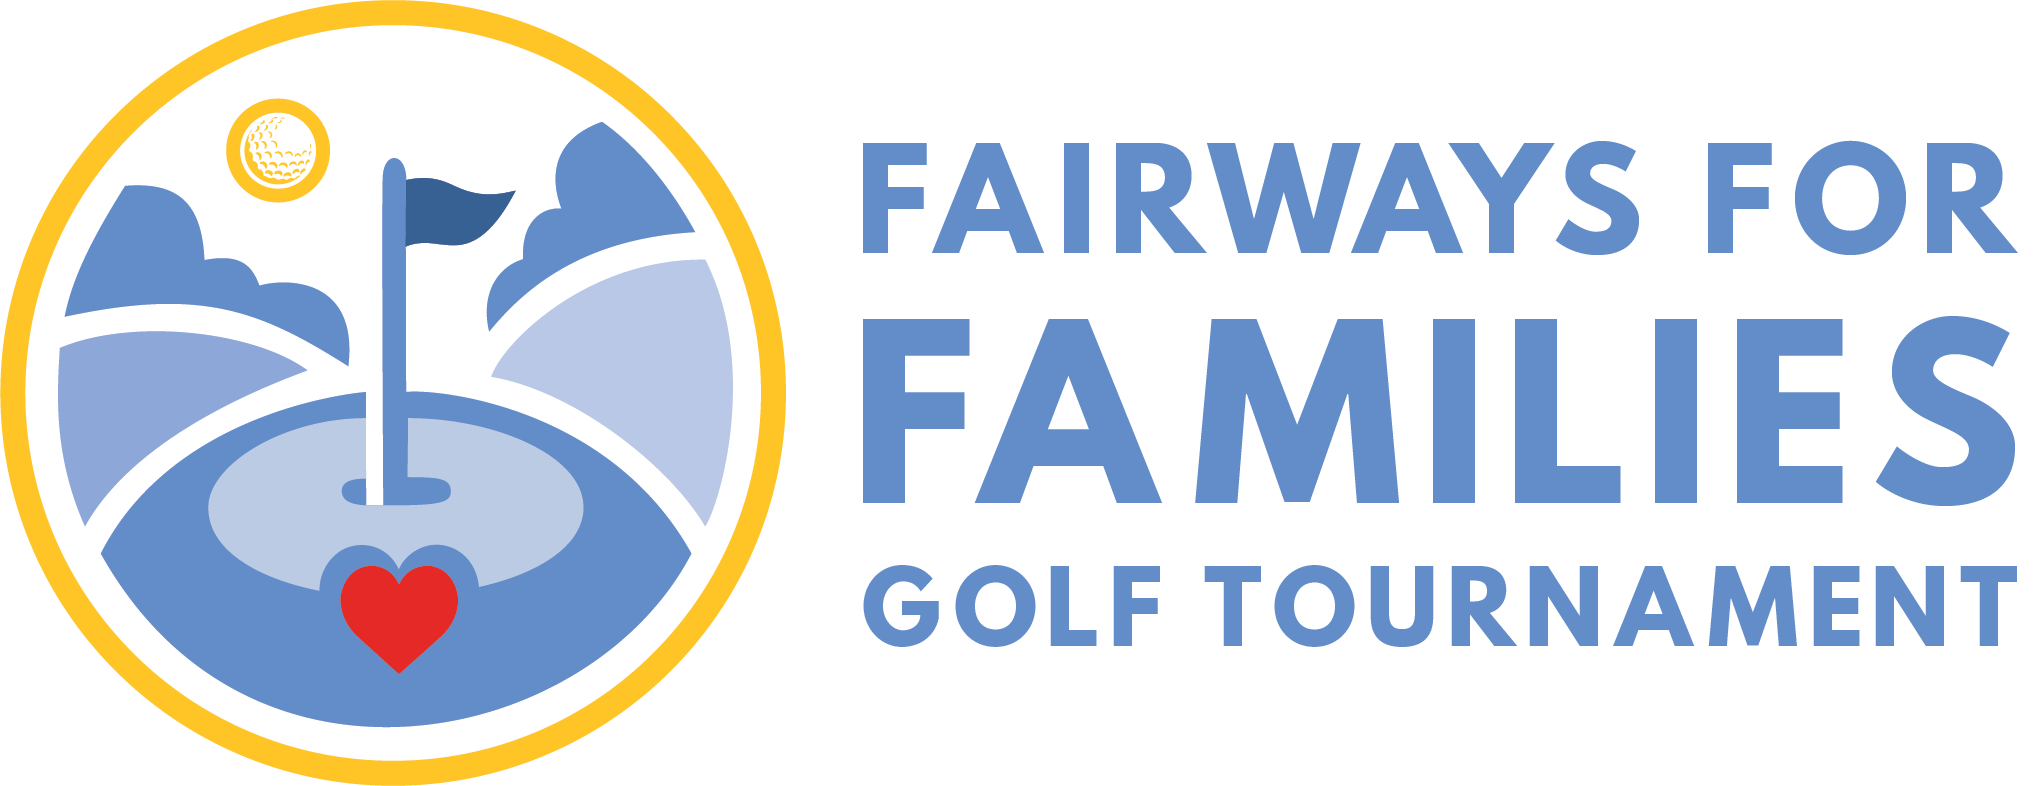 Fairways for Families Golf Tournament Logo Horizontal new.png (122 KB)